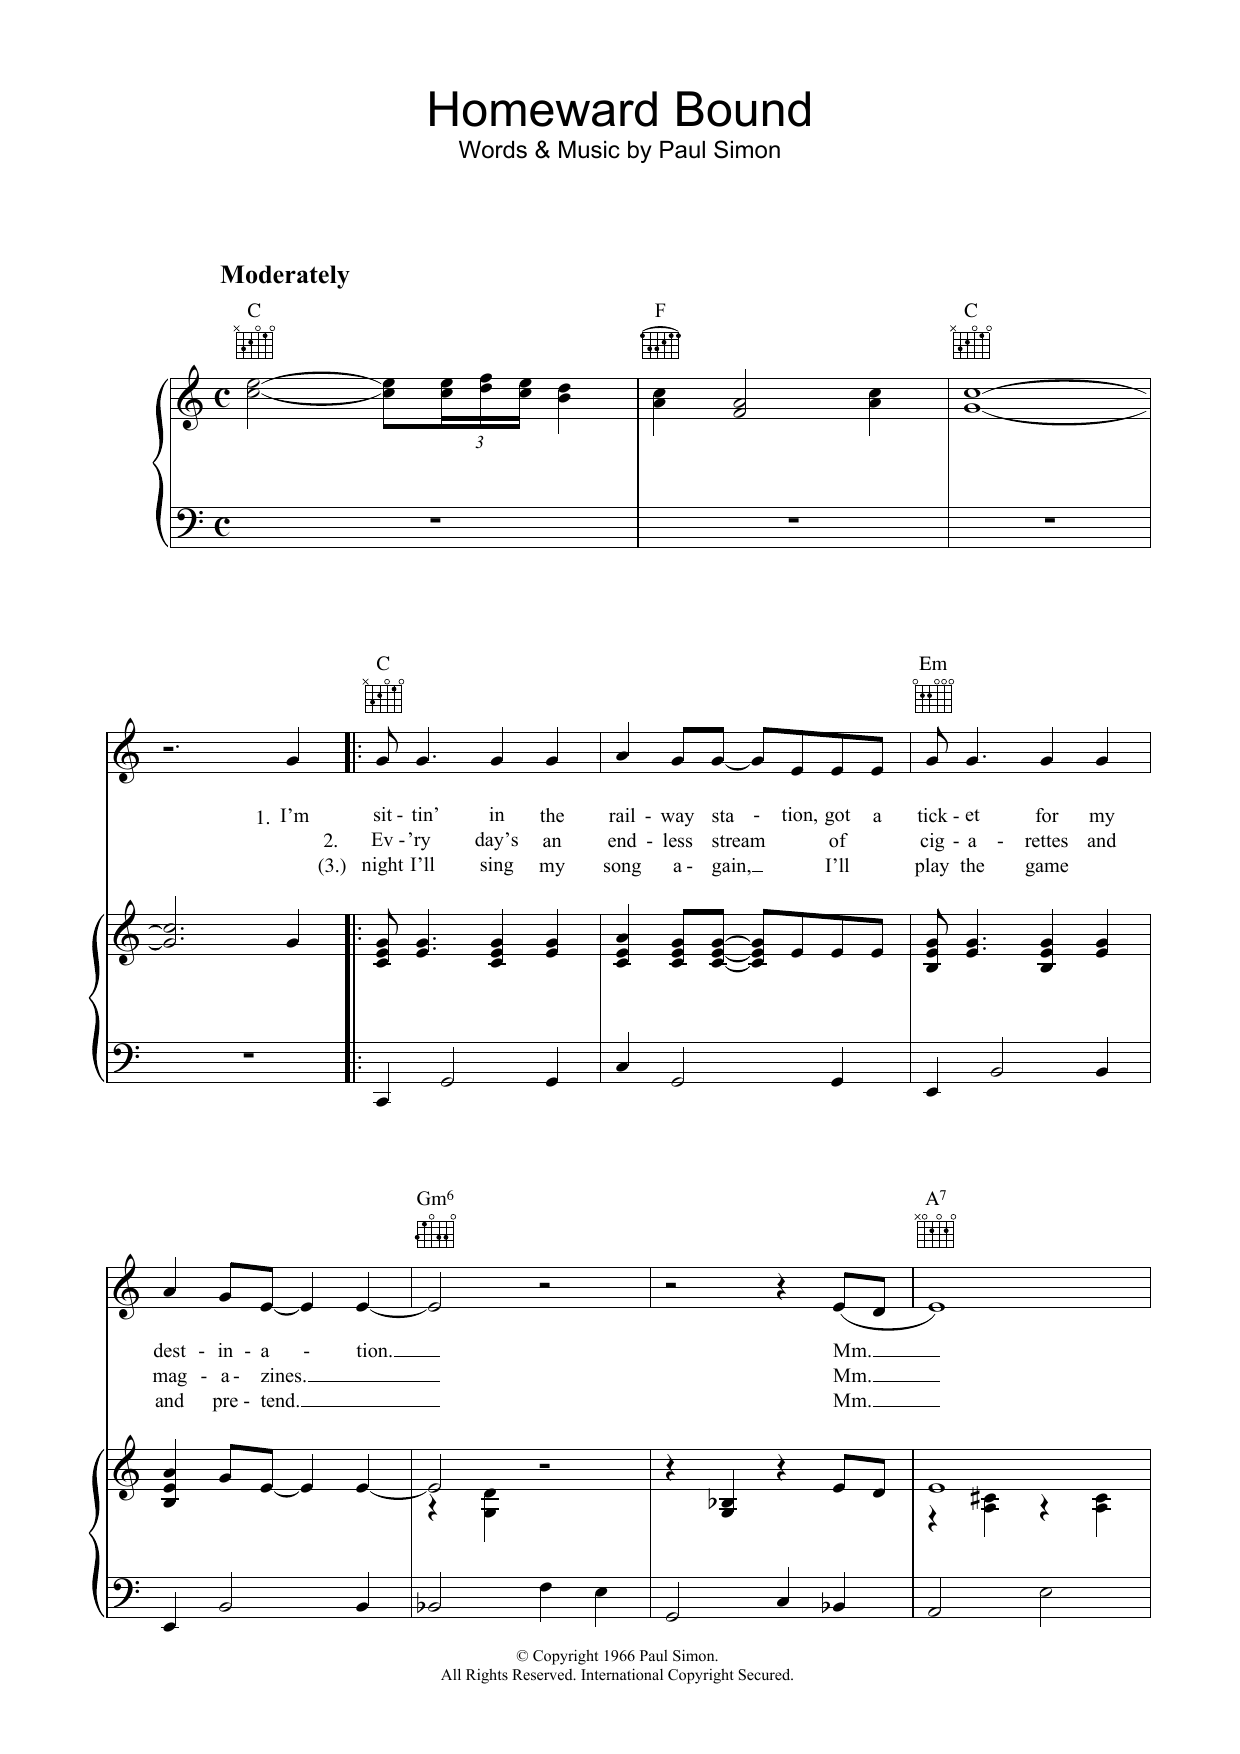 Simon & Garfunkel Homeward Bound Sheet Music Notes & Chords for Guitar Tab Play-Along - Download or Print PDF